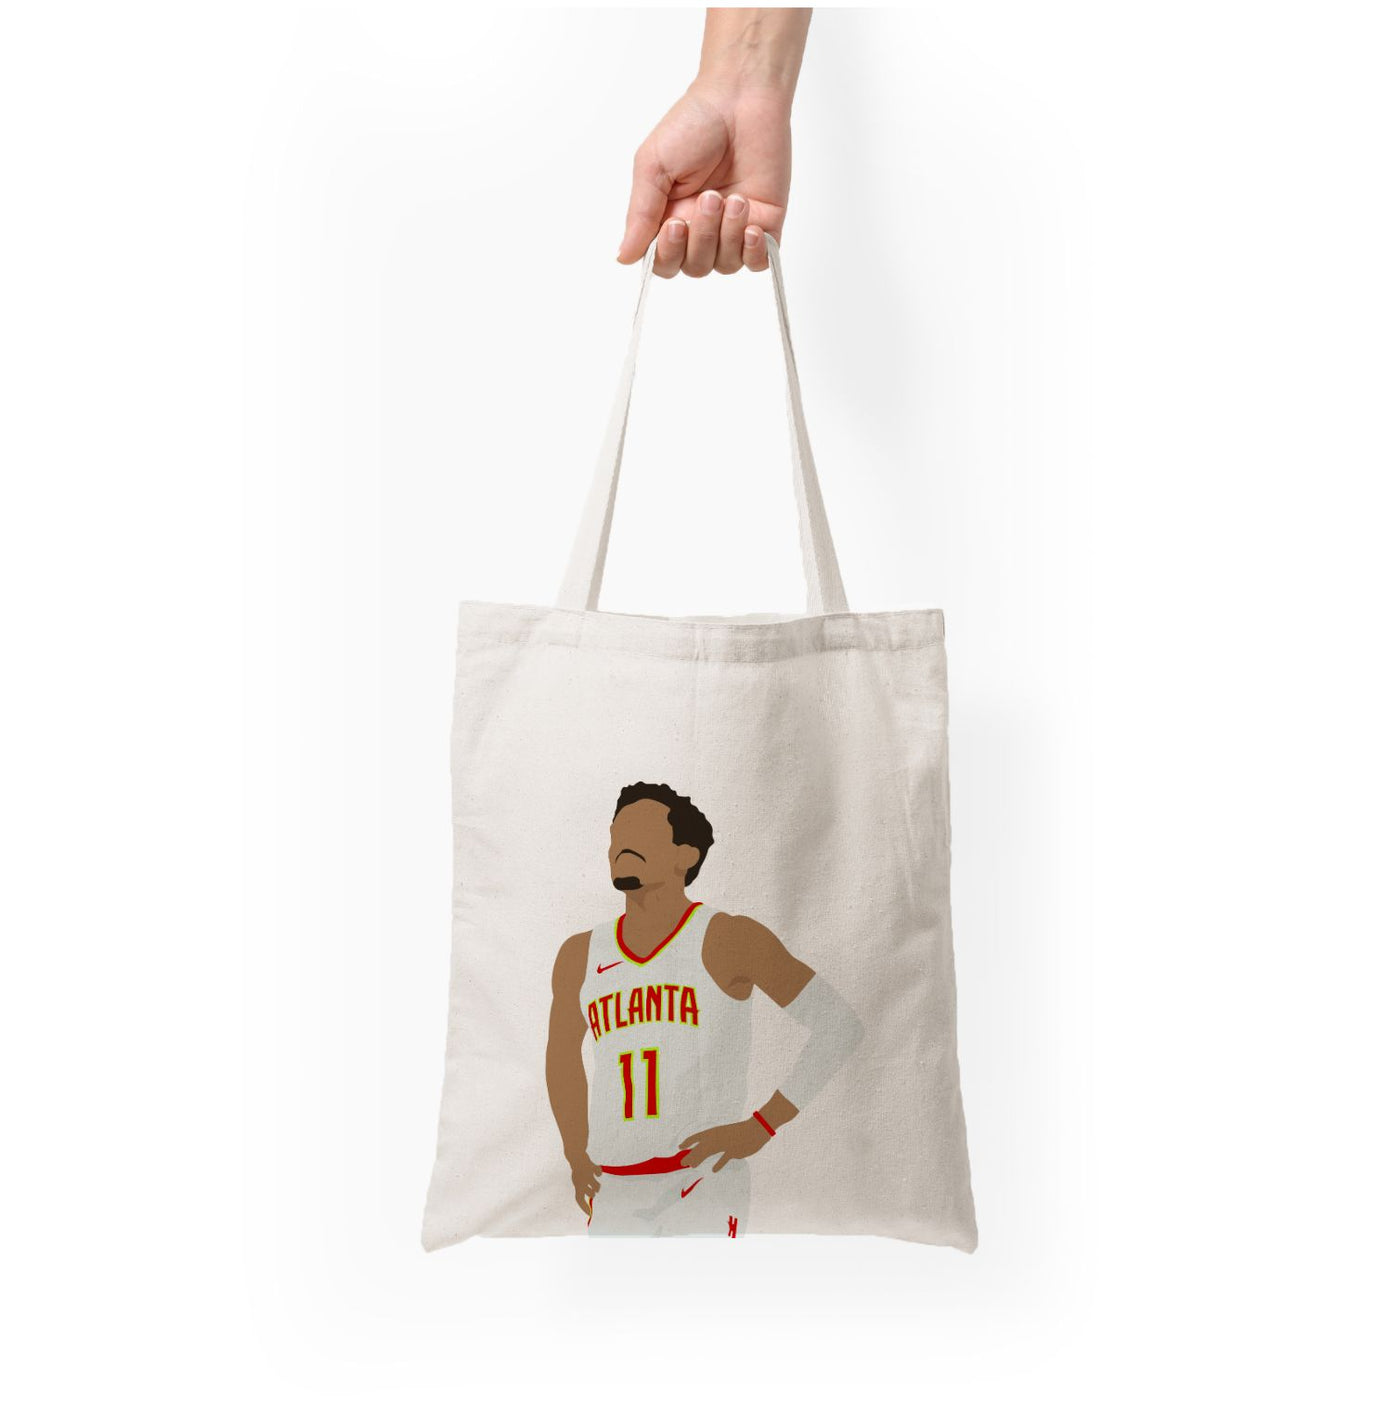 Trae Young - Basketball Tote Bag